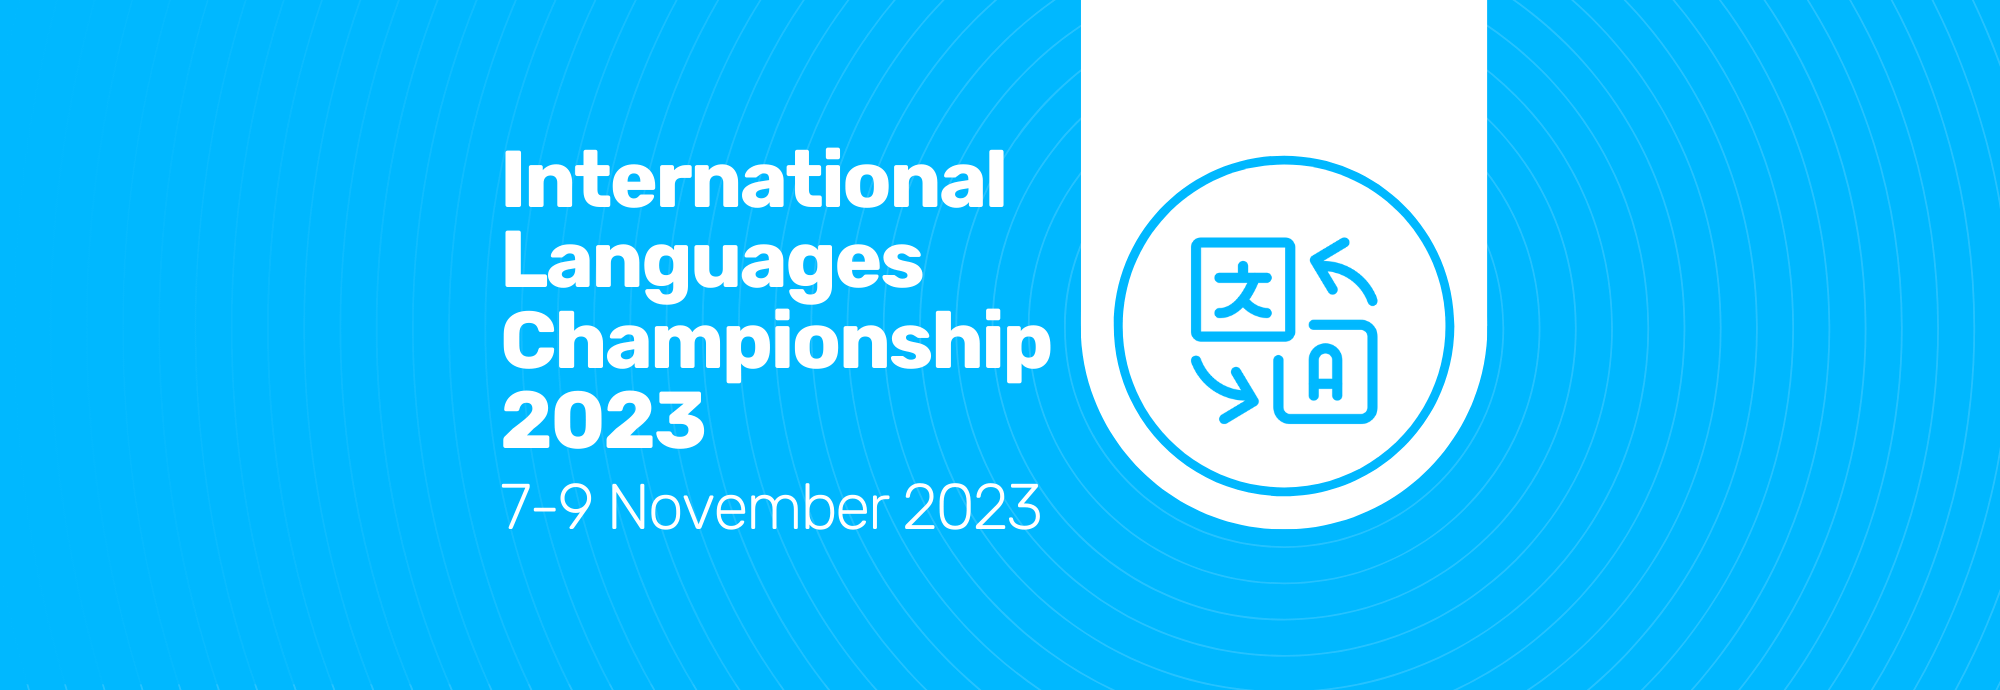 EP International Languages Championship 2023